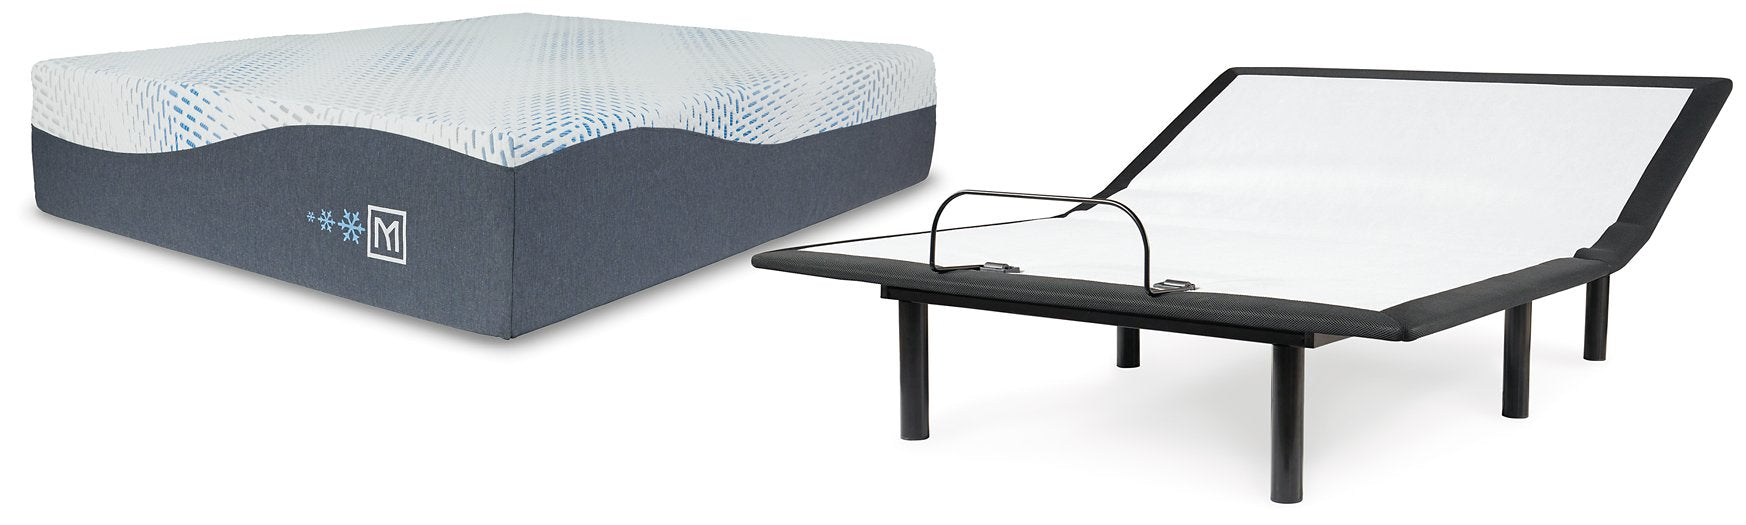 Millennium Cushion Firm Gel Memory Foam Hybrid Mattress and Base Set - Home And Beyond